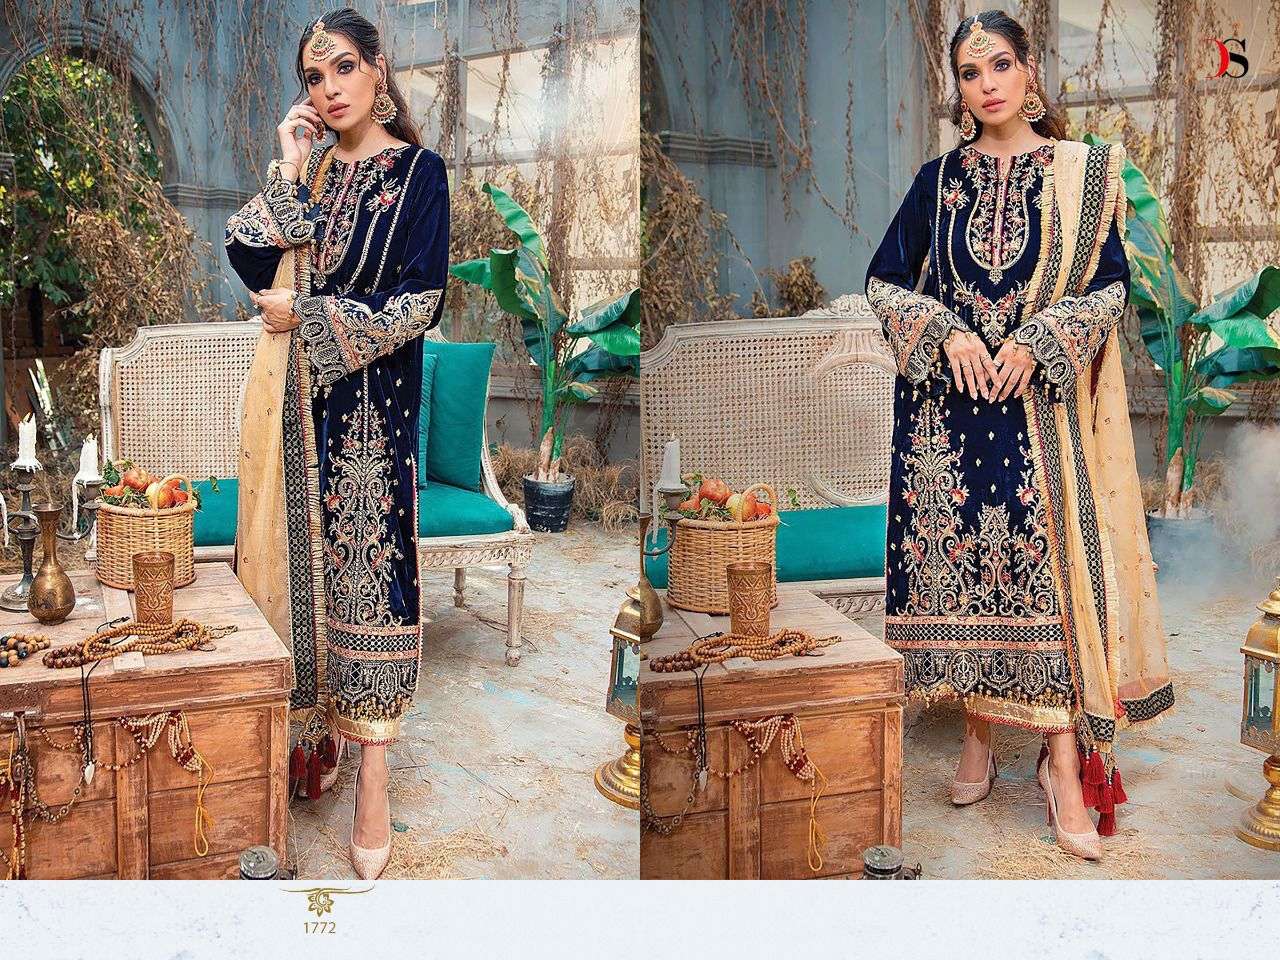 deepsy suits anaya velvet-22 winter look velvet embrdoidered salwar kameez wholesale price